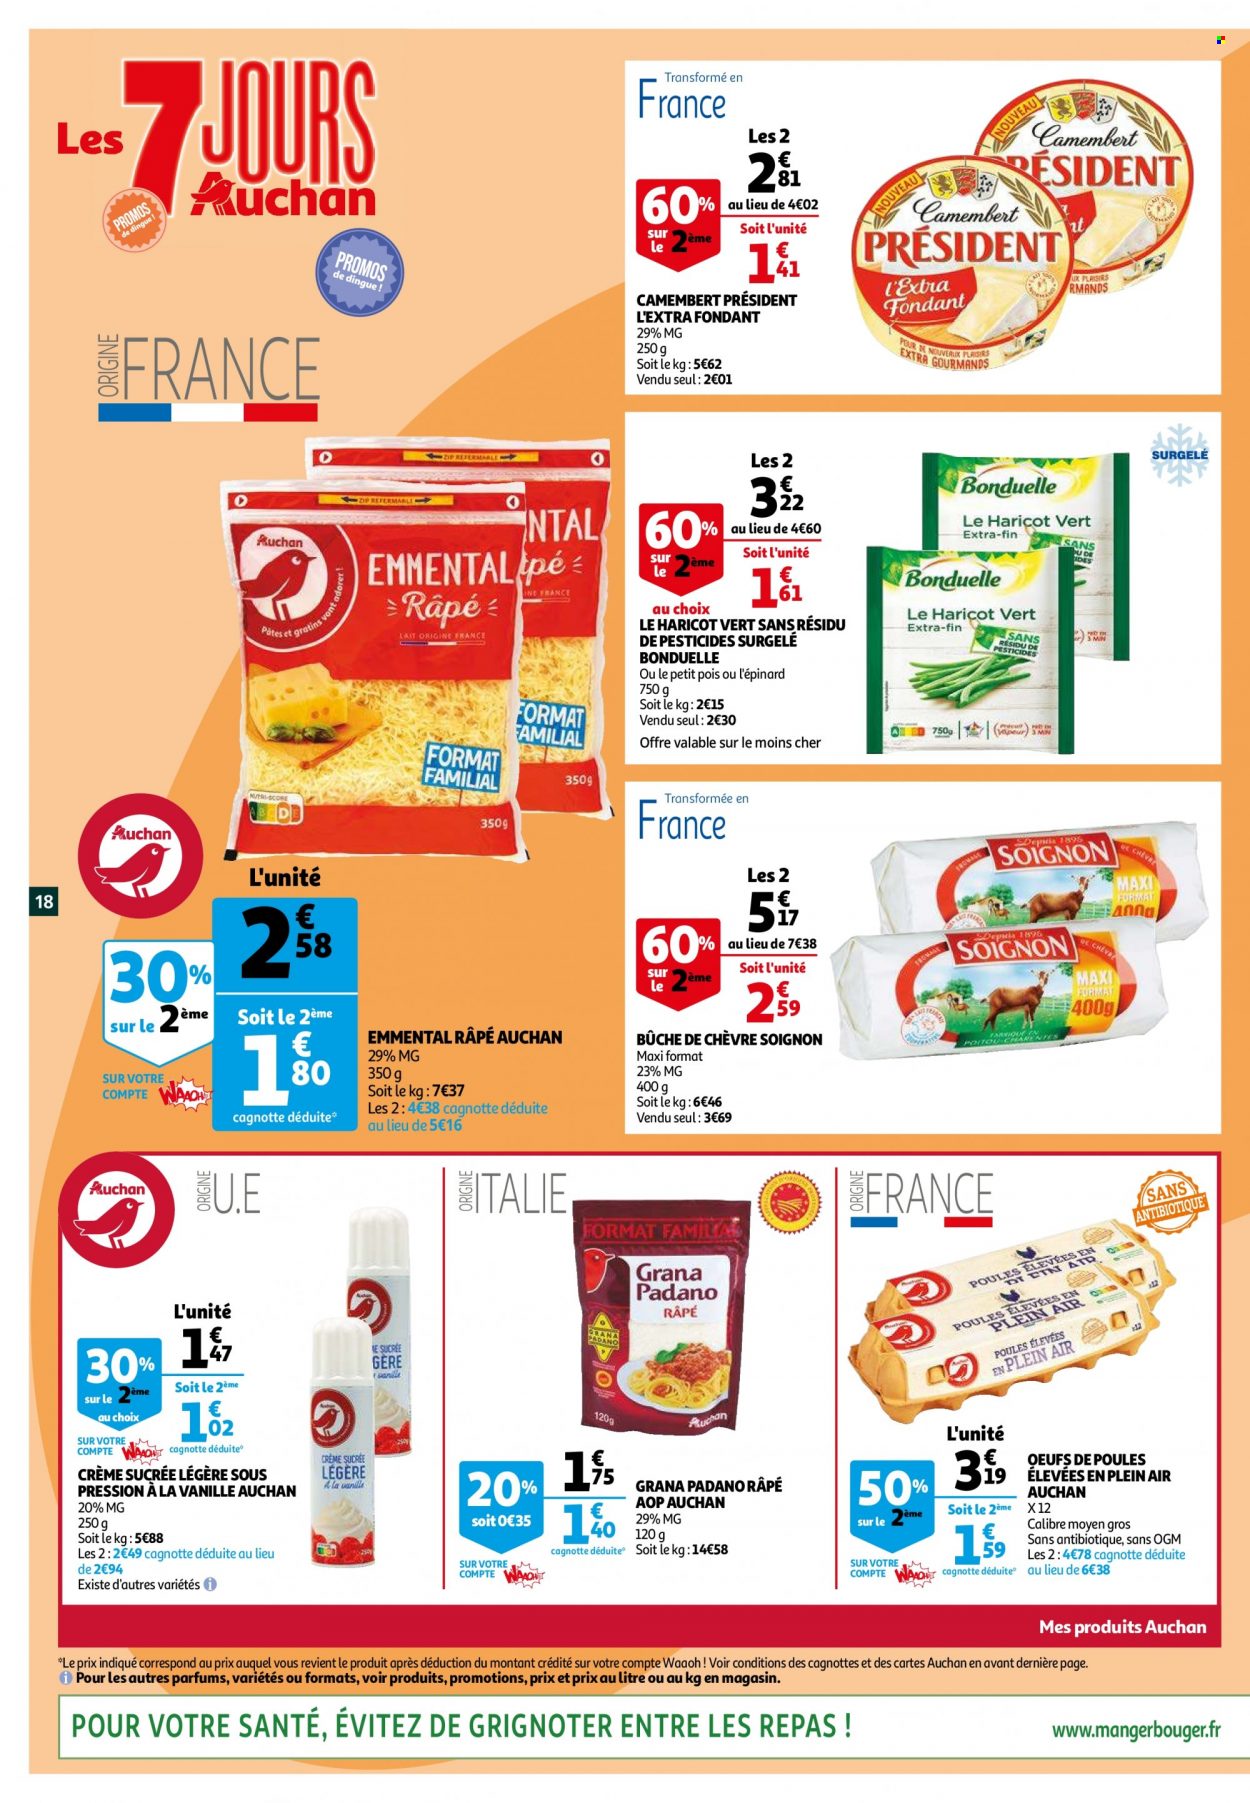 Catalogue Auchan - 06.07.2022 - 12.07.2022. 